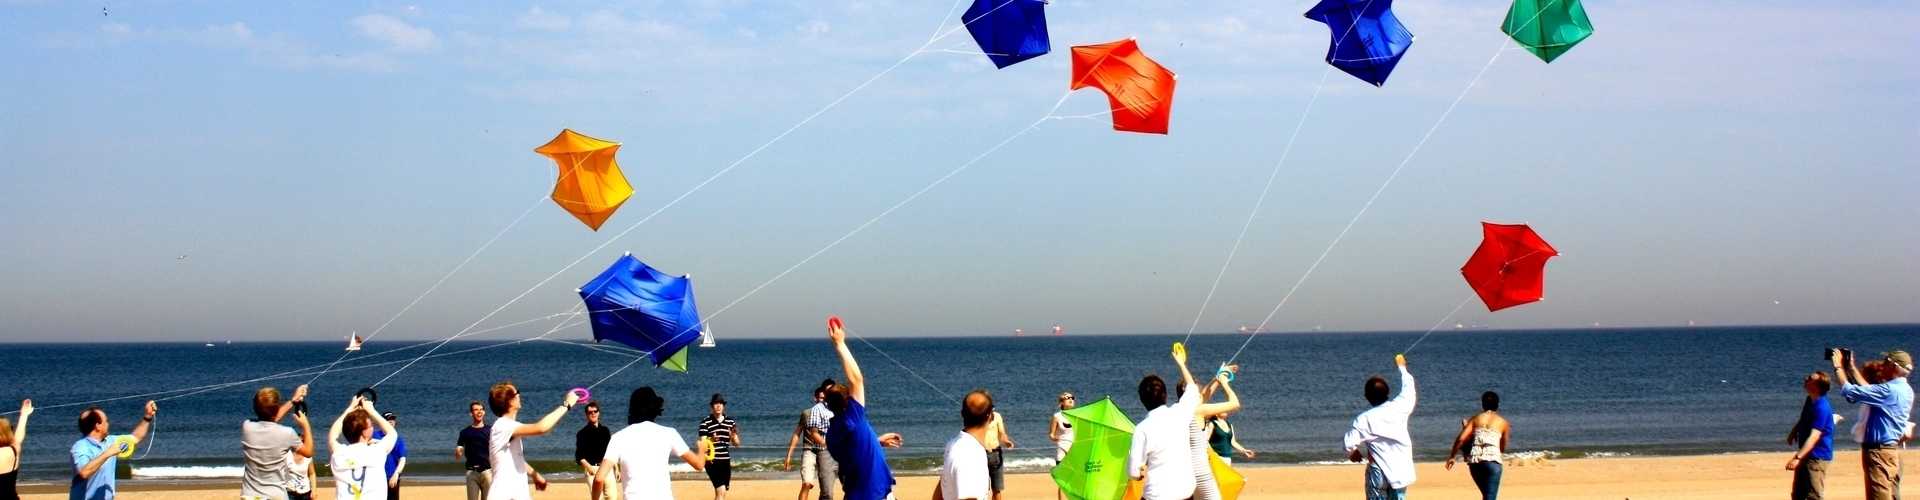 Sanjo kitefight (Japans vechtvliegeren)